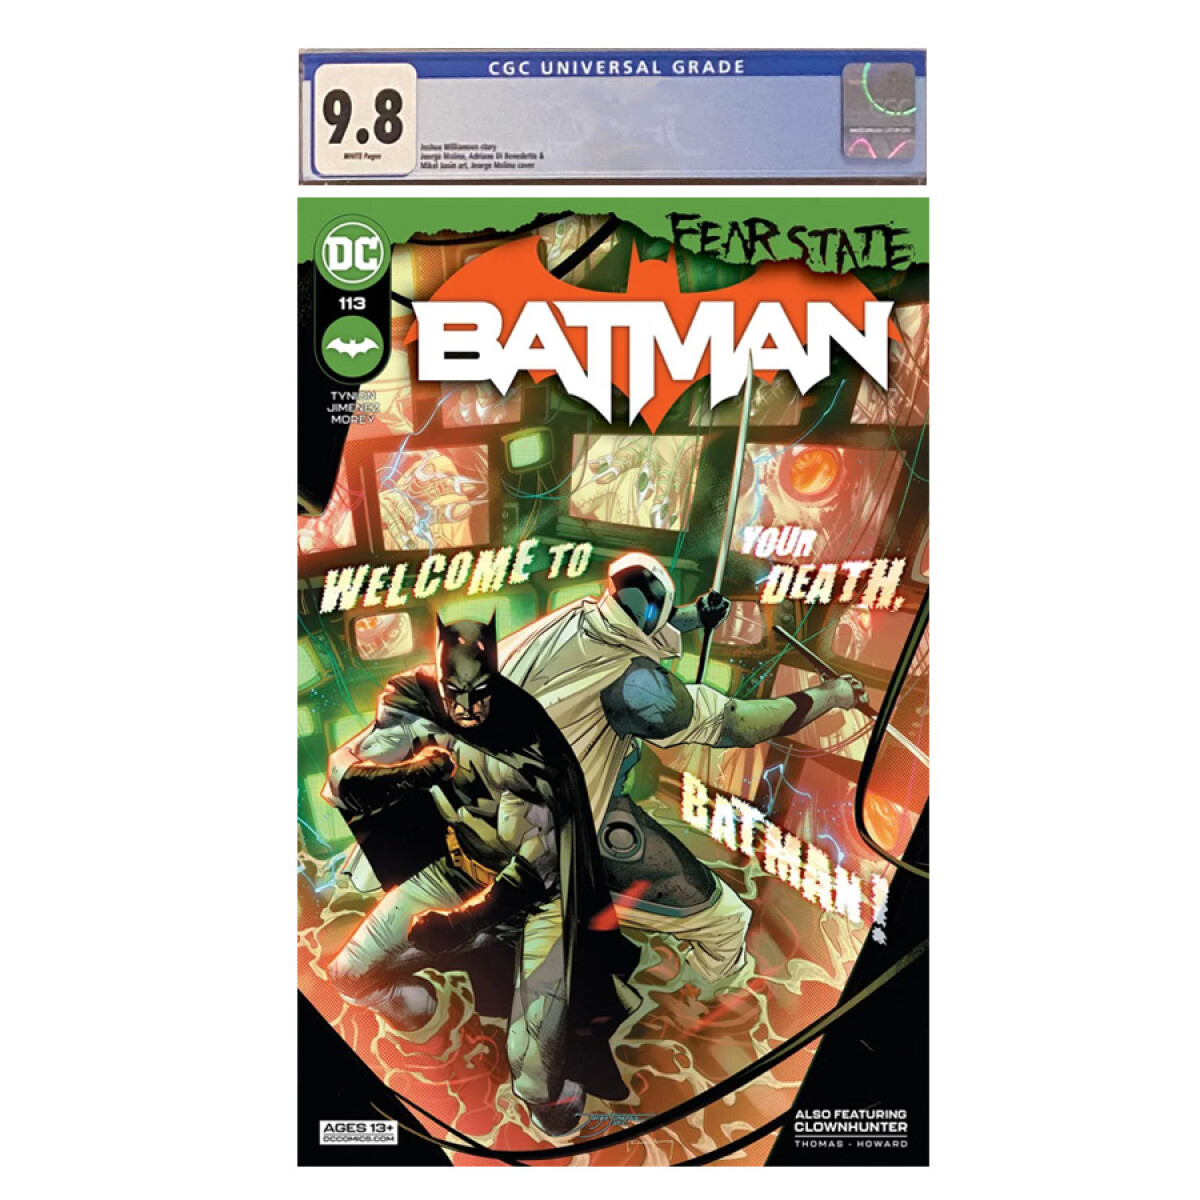 CGC Universal Grade Comic - Batman Fear State! · Batman #113 